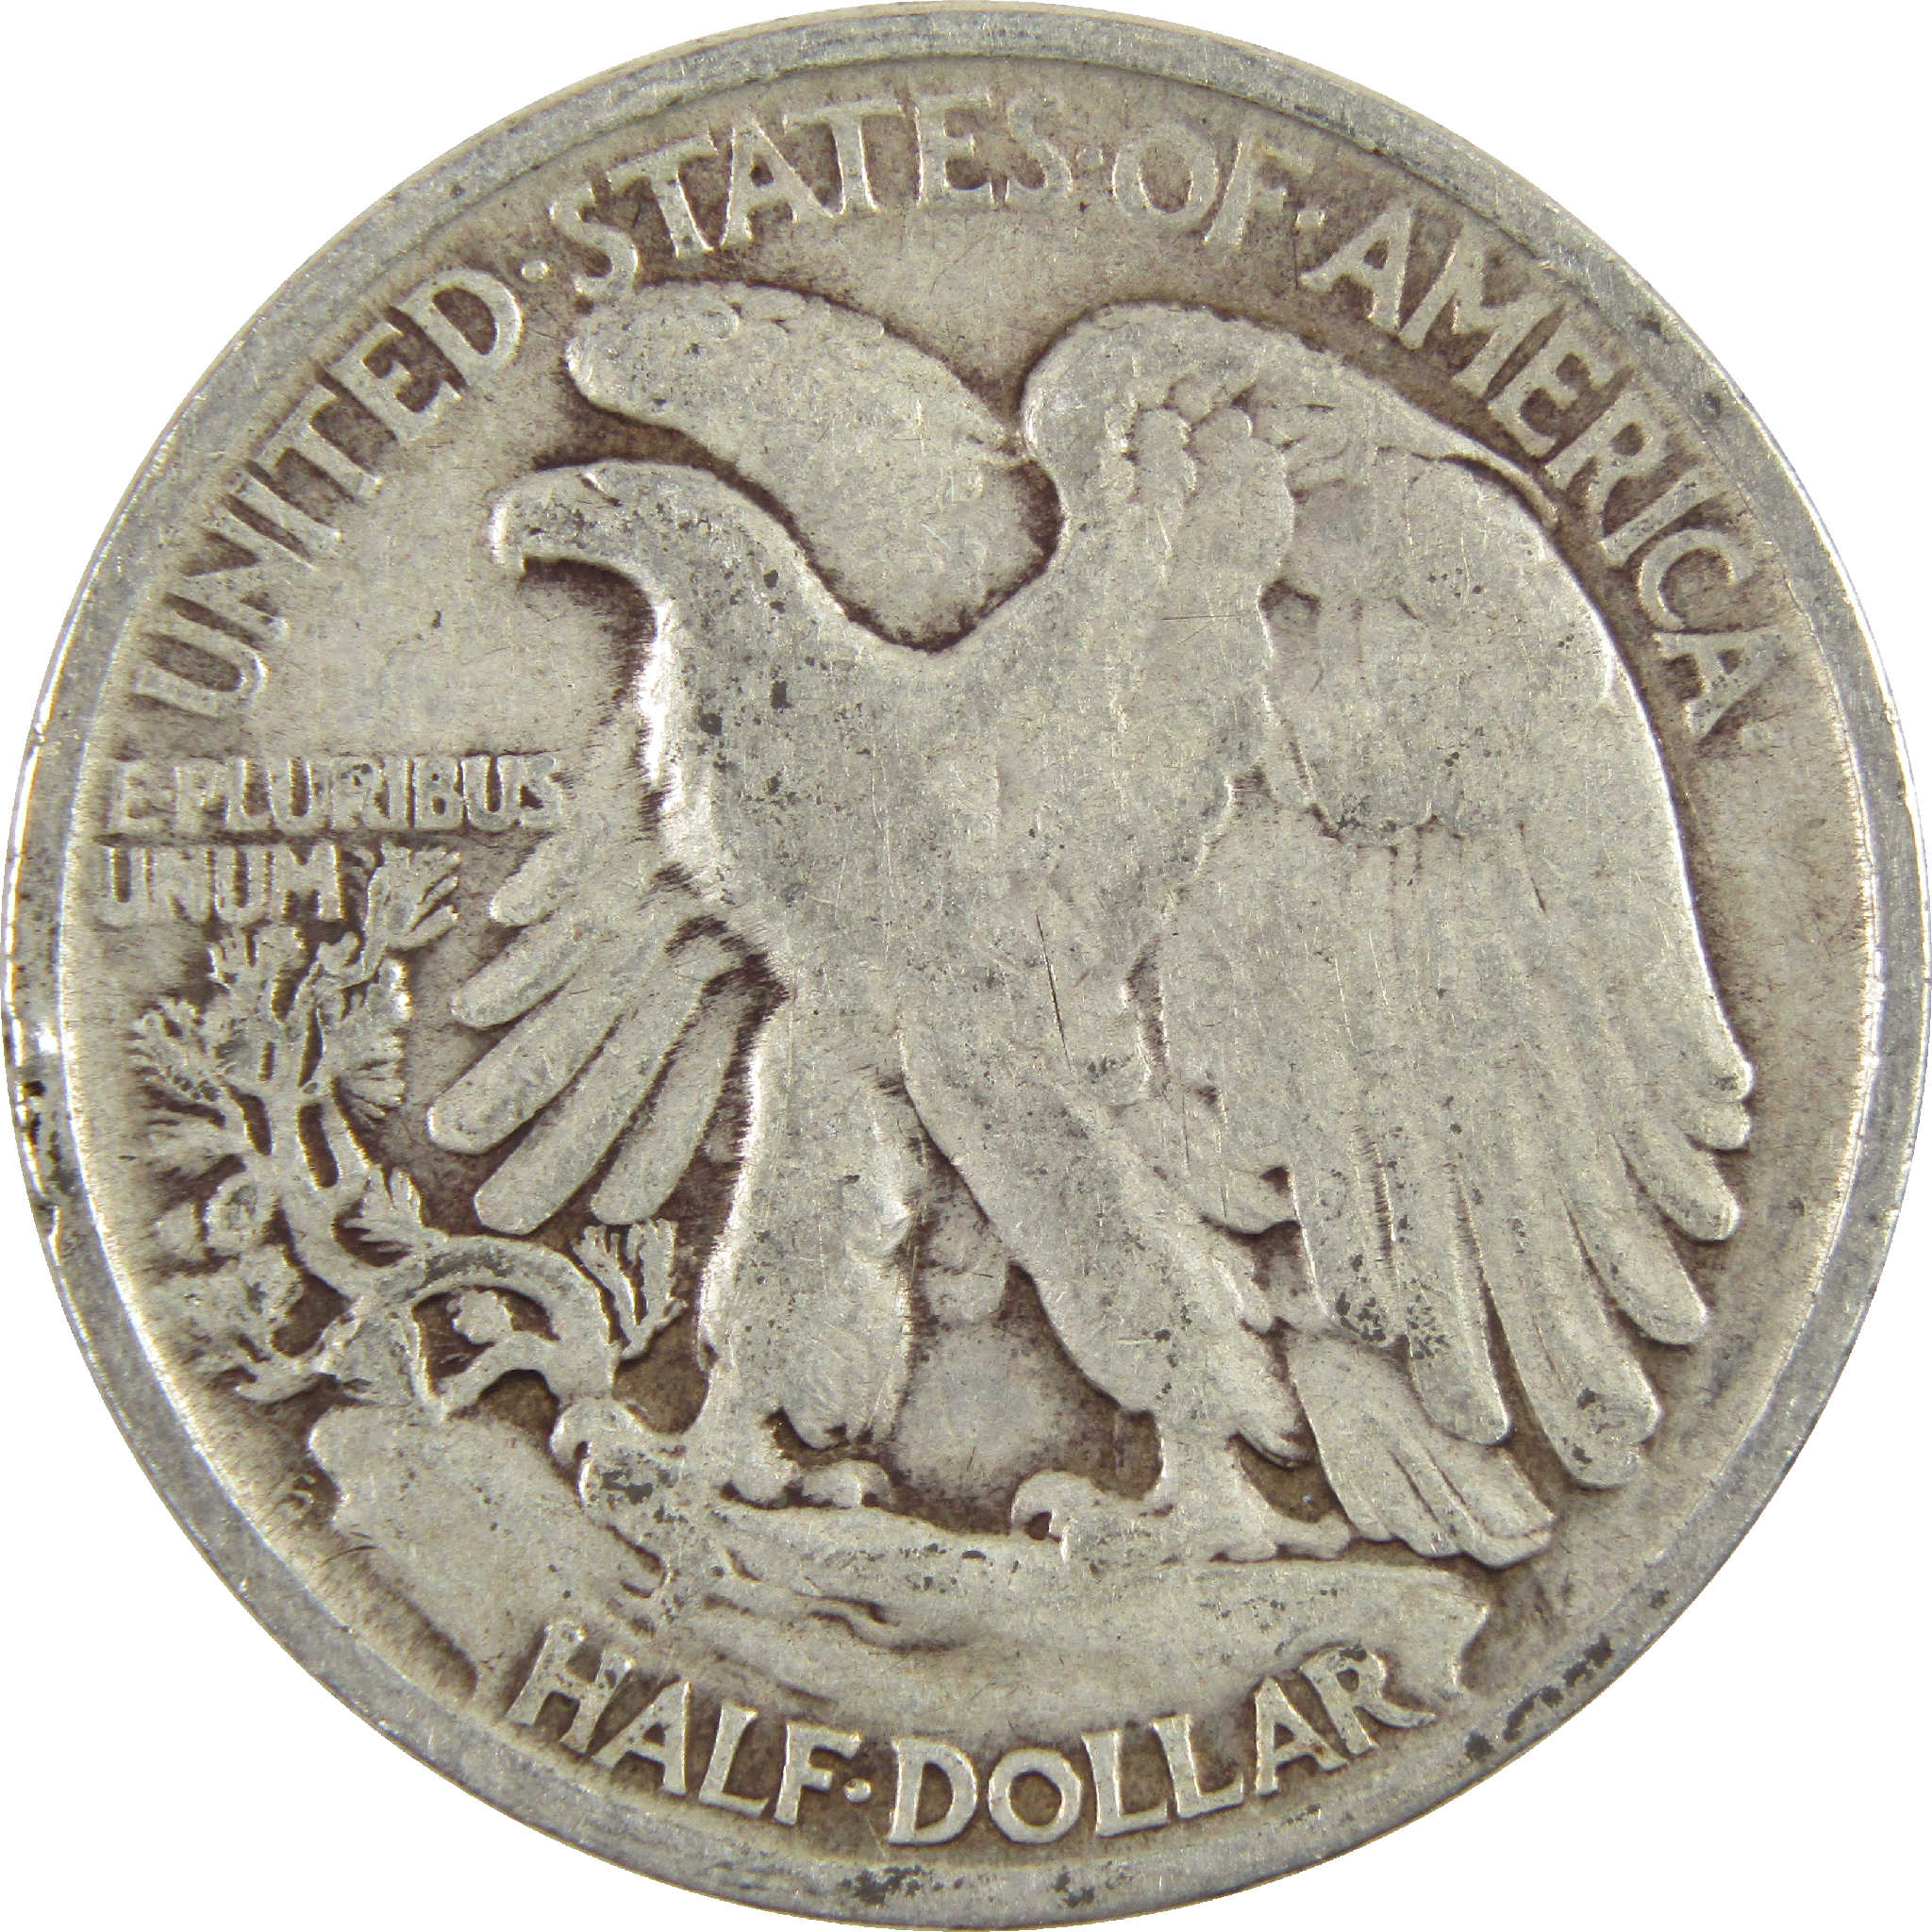 1946 S Liberty Walking Half Dollar VG Very Good Silver 50c Coin